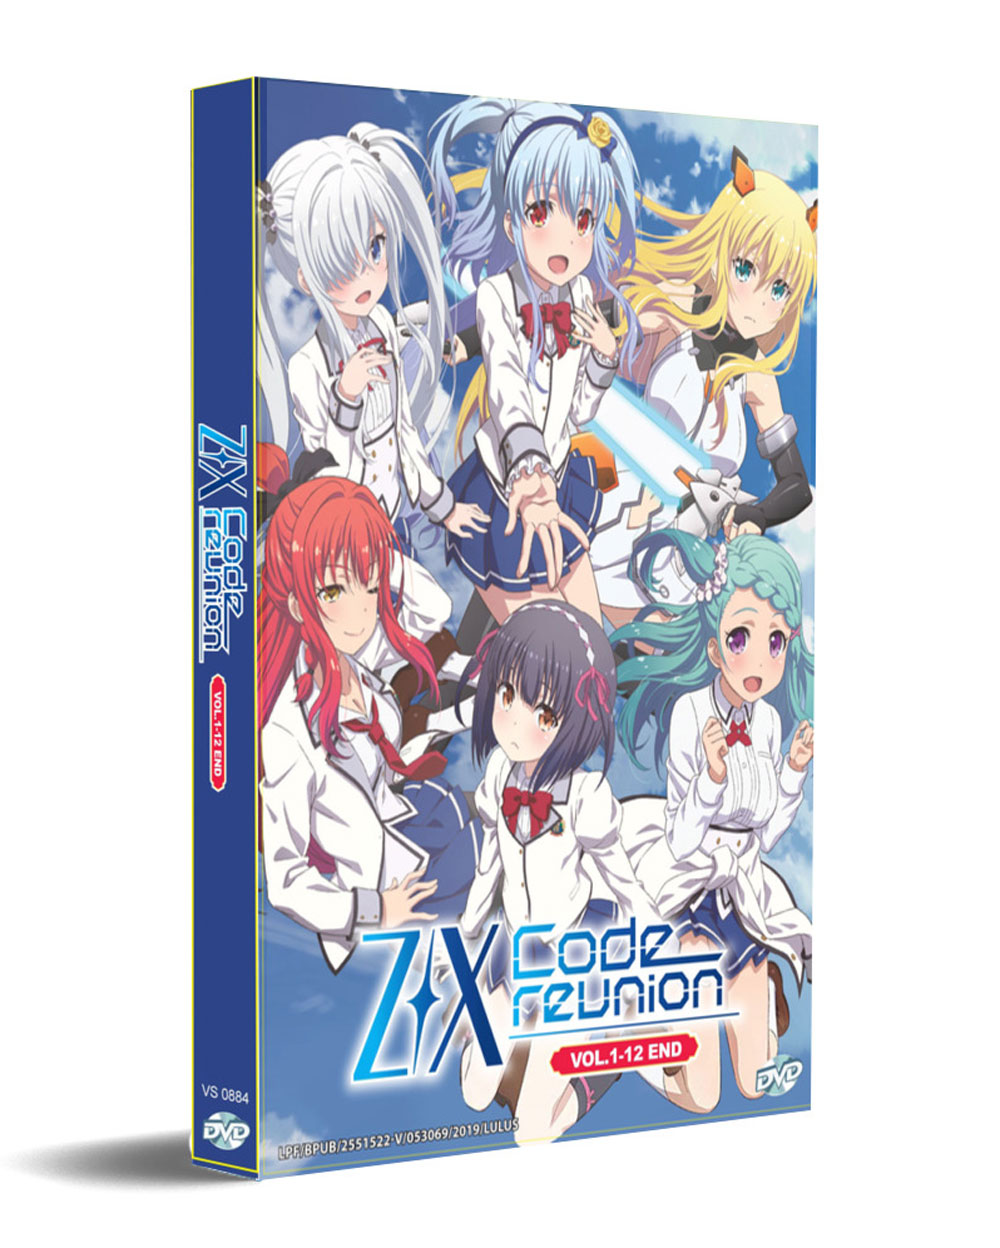 Z/X: Code Reunion (DVD) (2019) Anime